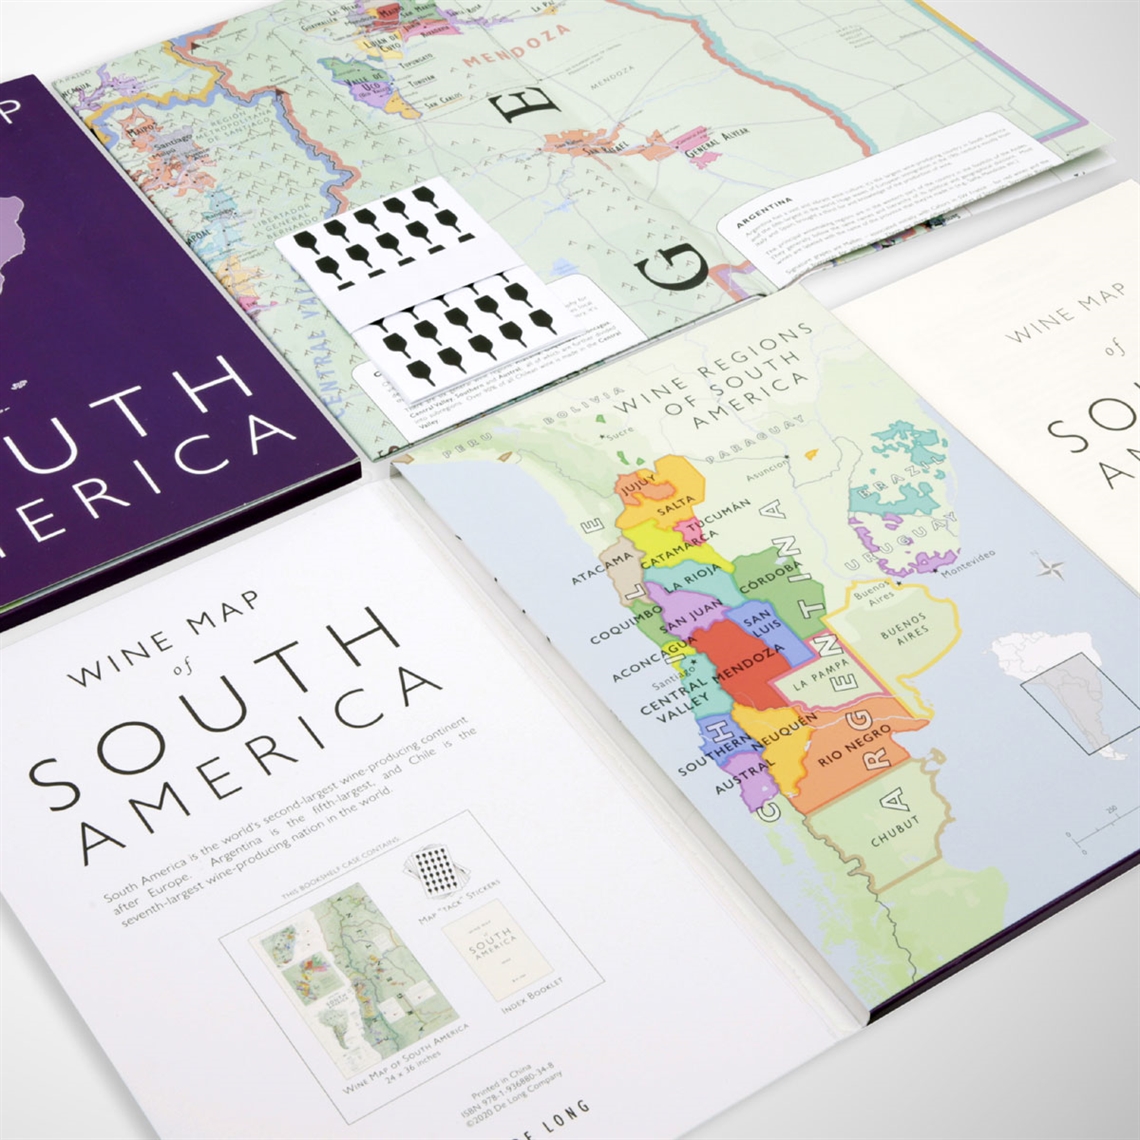 De Long’s Wine Map of South America - Bookshelf Edition